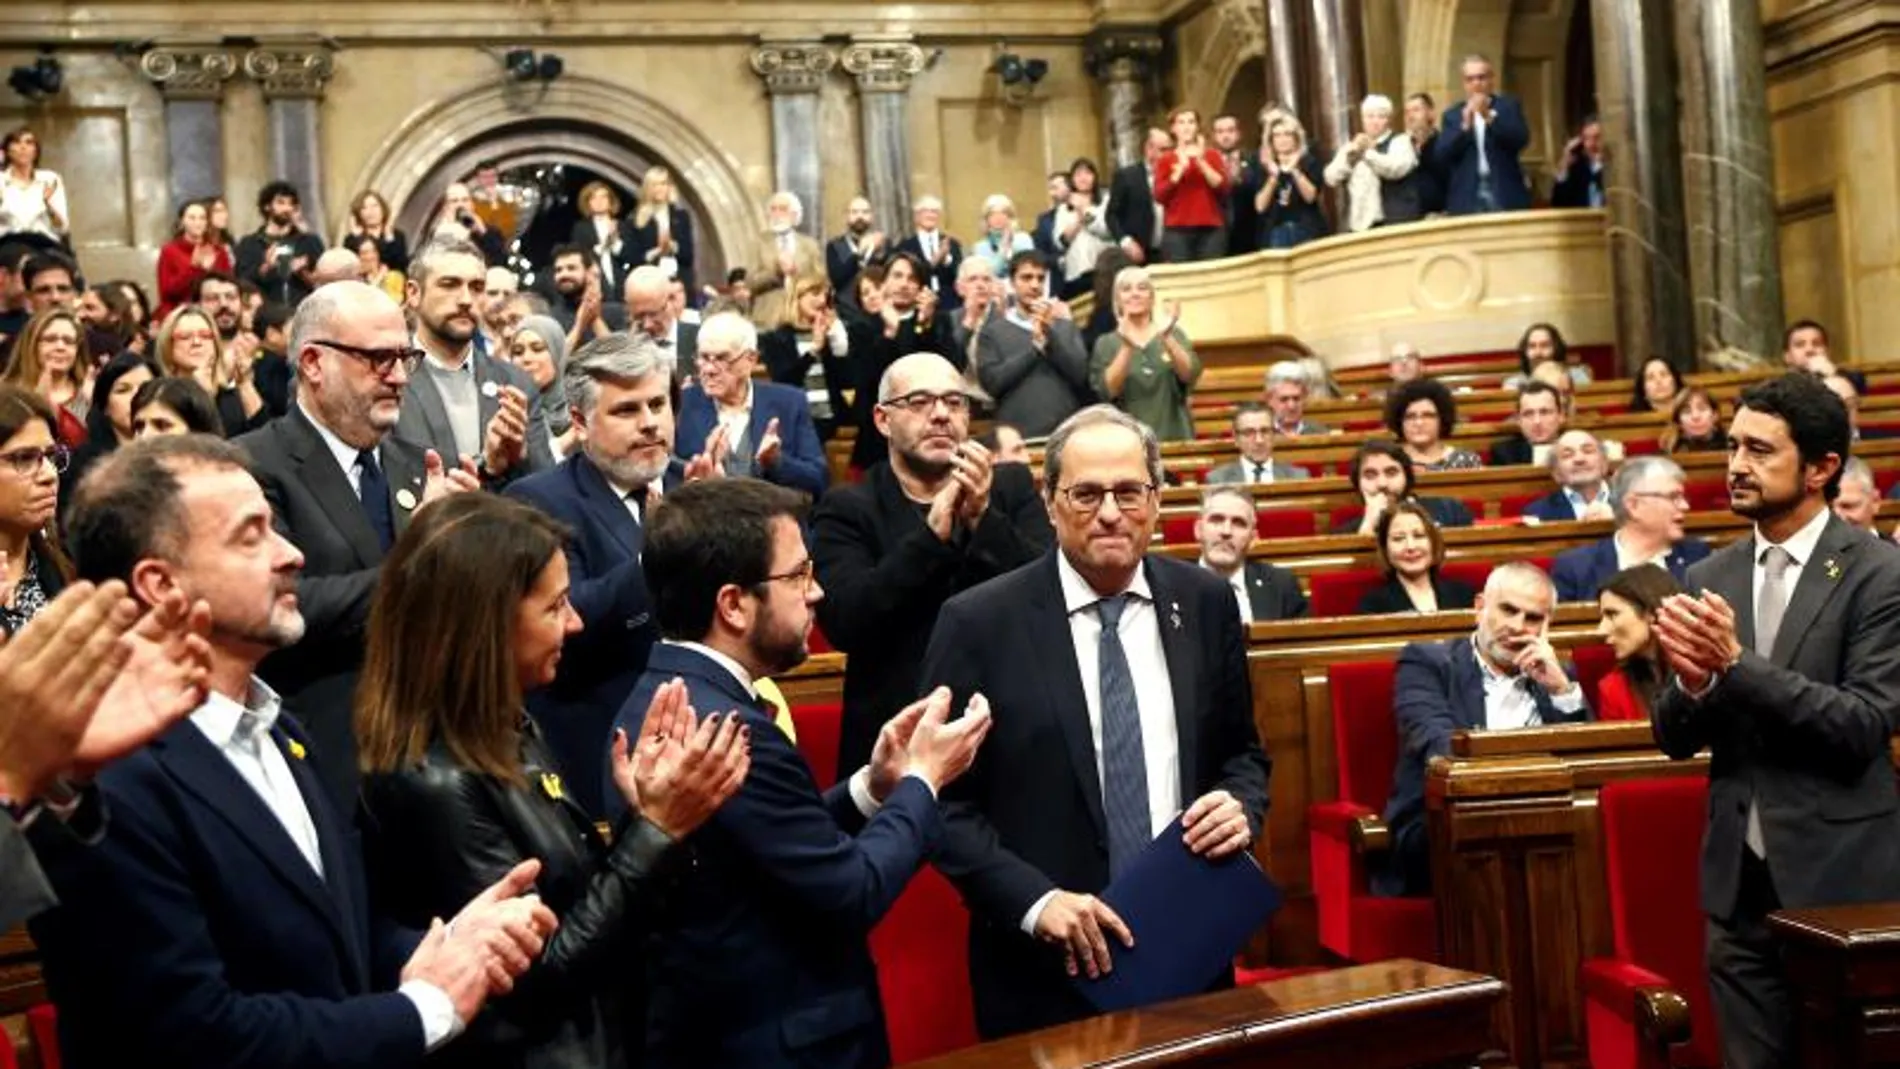 Quim Torra en una foto de archivo dentro del Parlament catalán